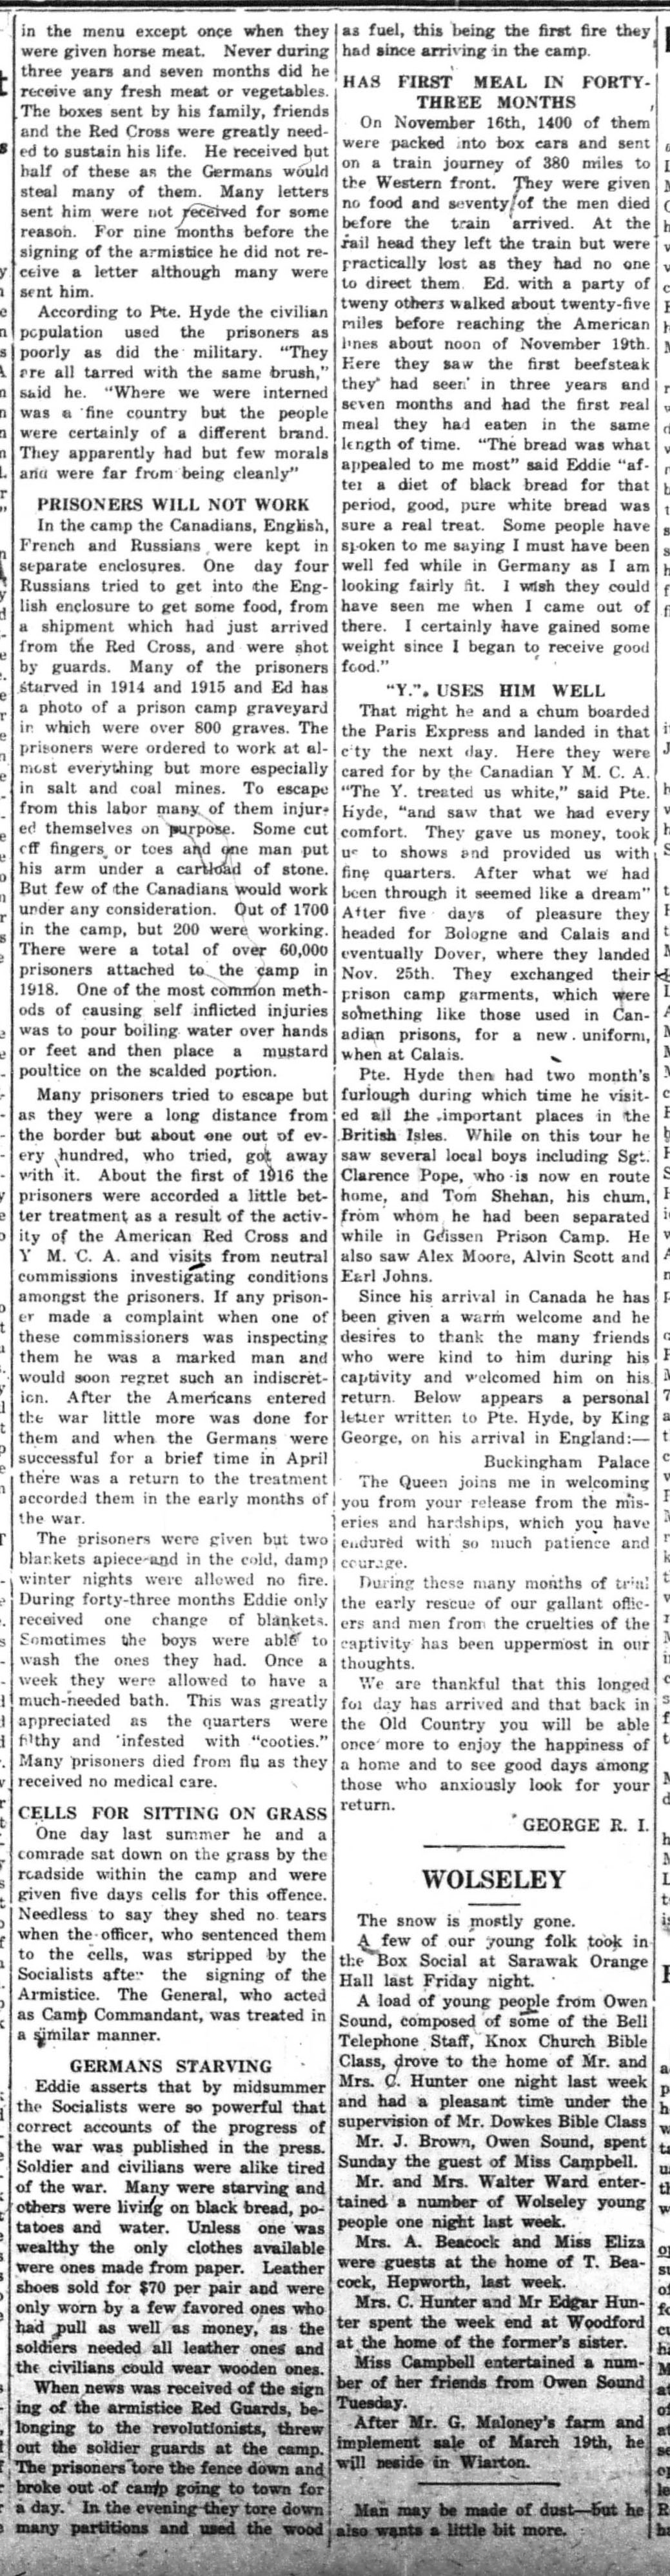 Canadian Echo Wiarton, March 19, 1919 (part 2)